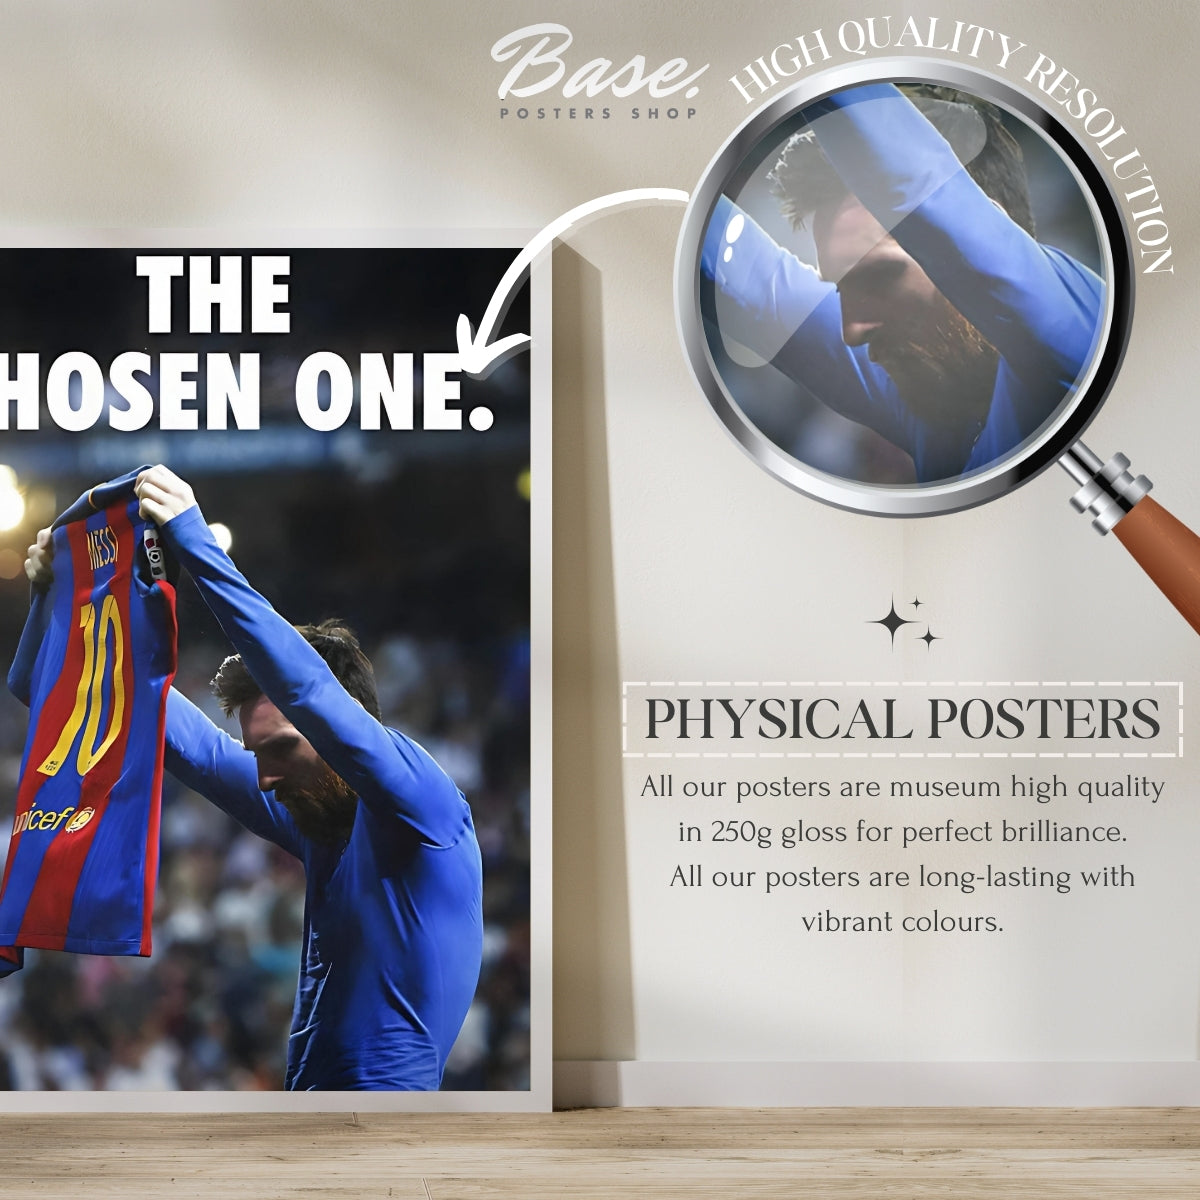 Messi 'The Chosen one'